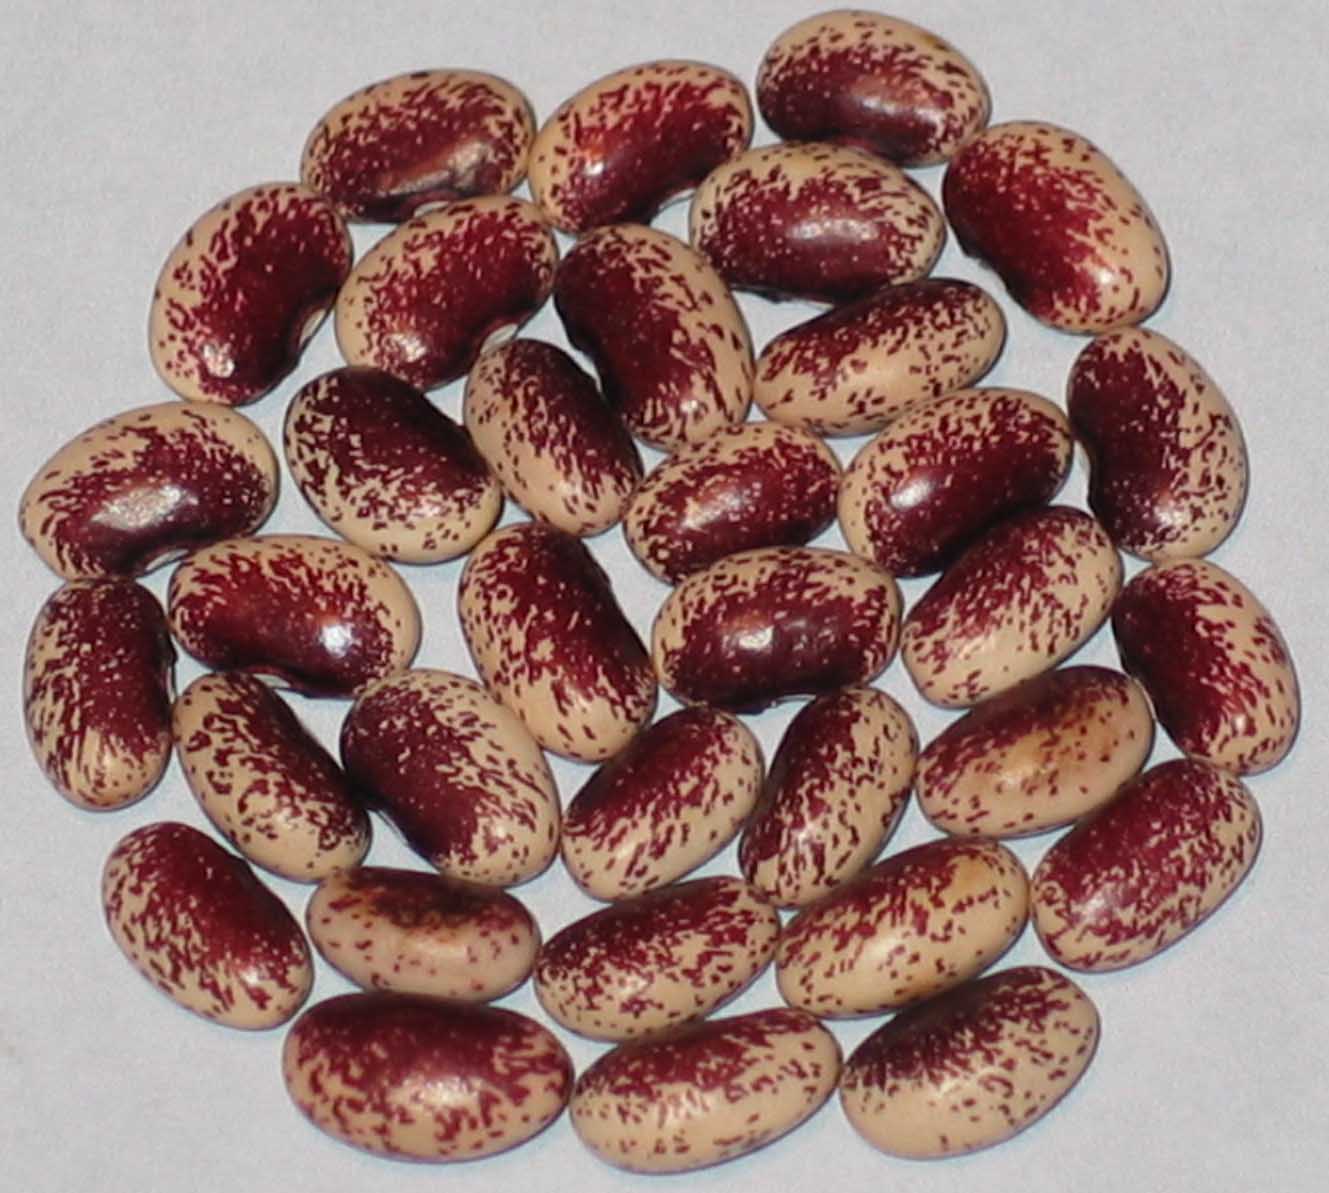 image of Nigel beans